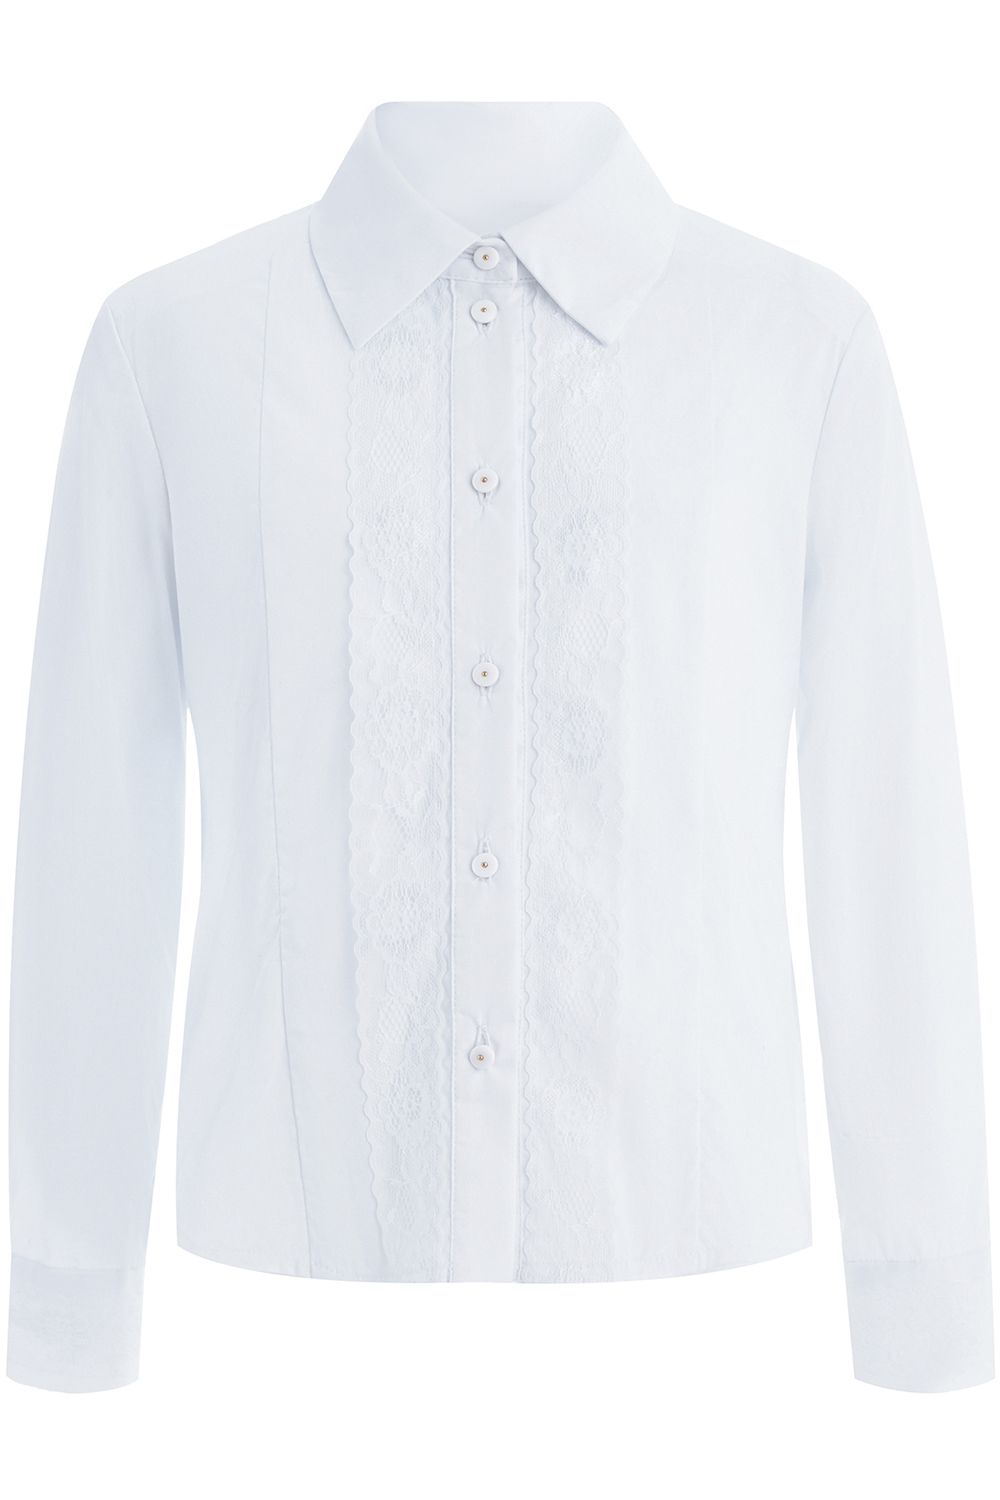 Блуза Cleverly, размер 140, цвет белый - фото 1